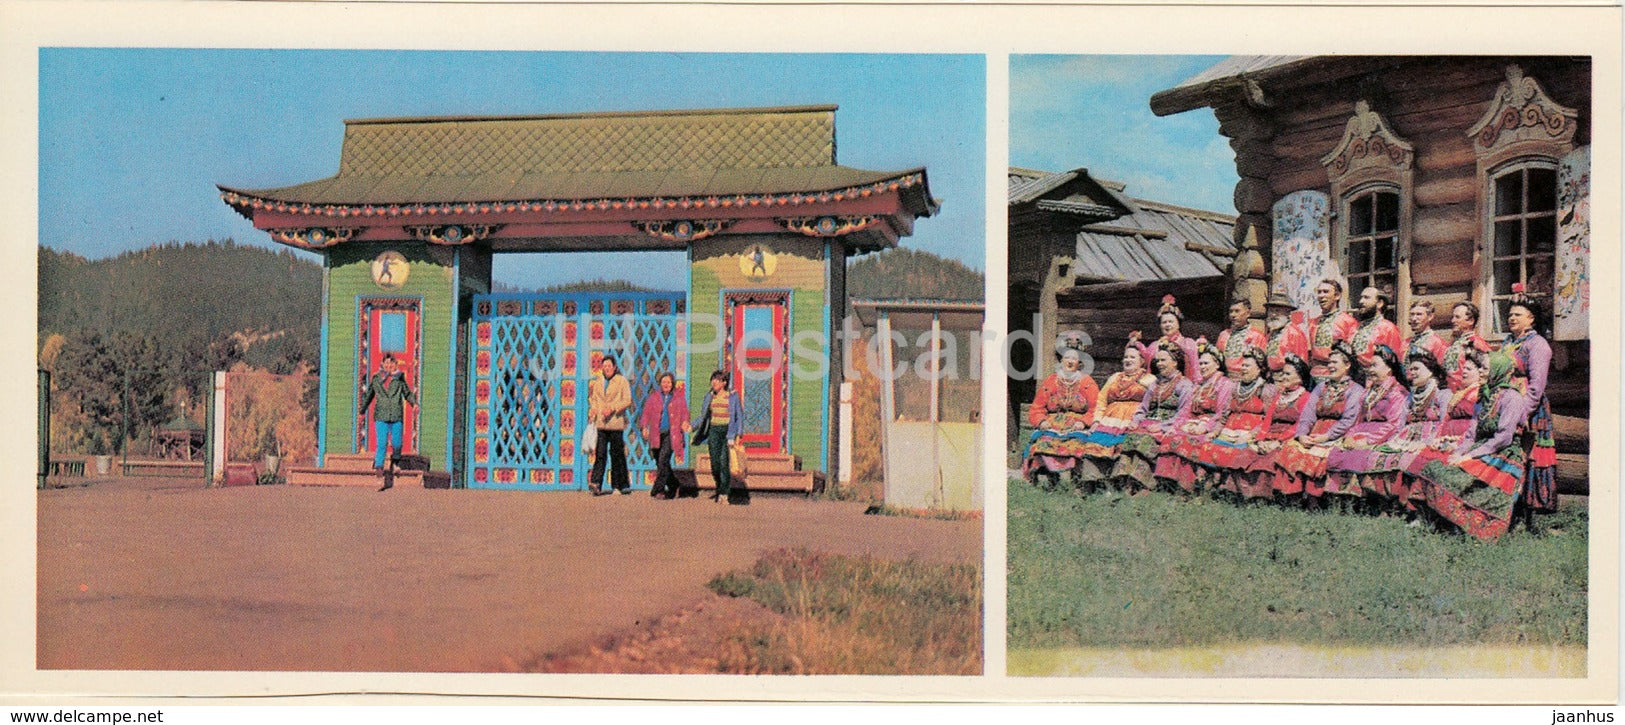 Ulan-Ude - State Ethnographic Museum of Culture and Life - folk choir - Buryatia - 1978 - Russia USSR - unused - JH Postcards